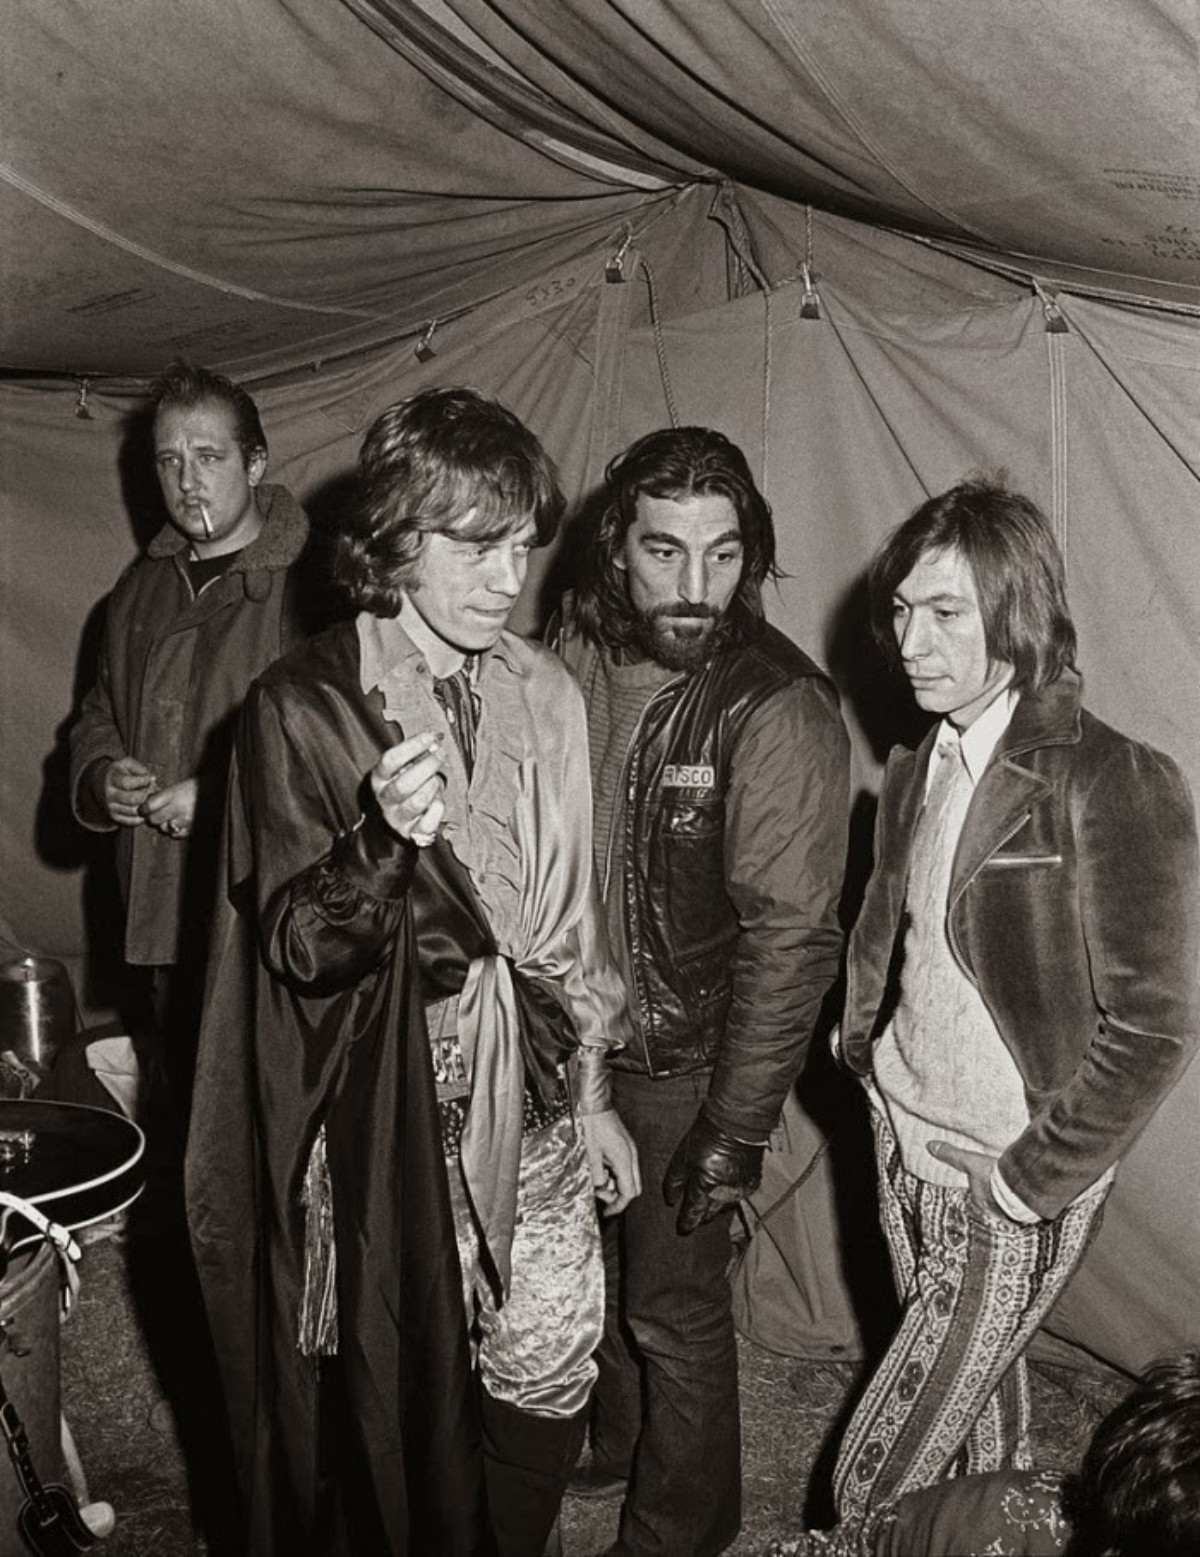 Mick Jagger at Altamont 1969